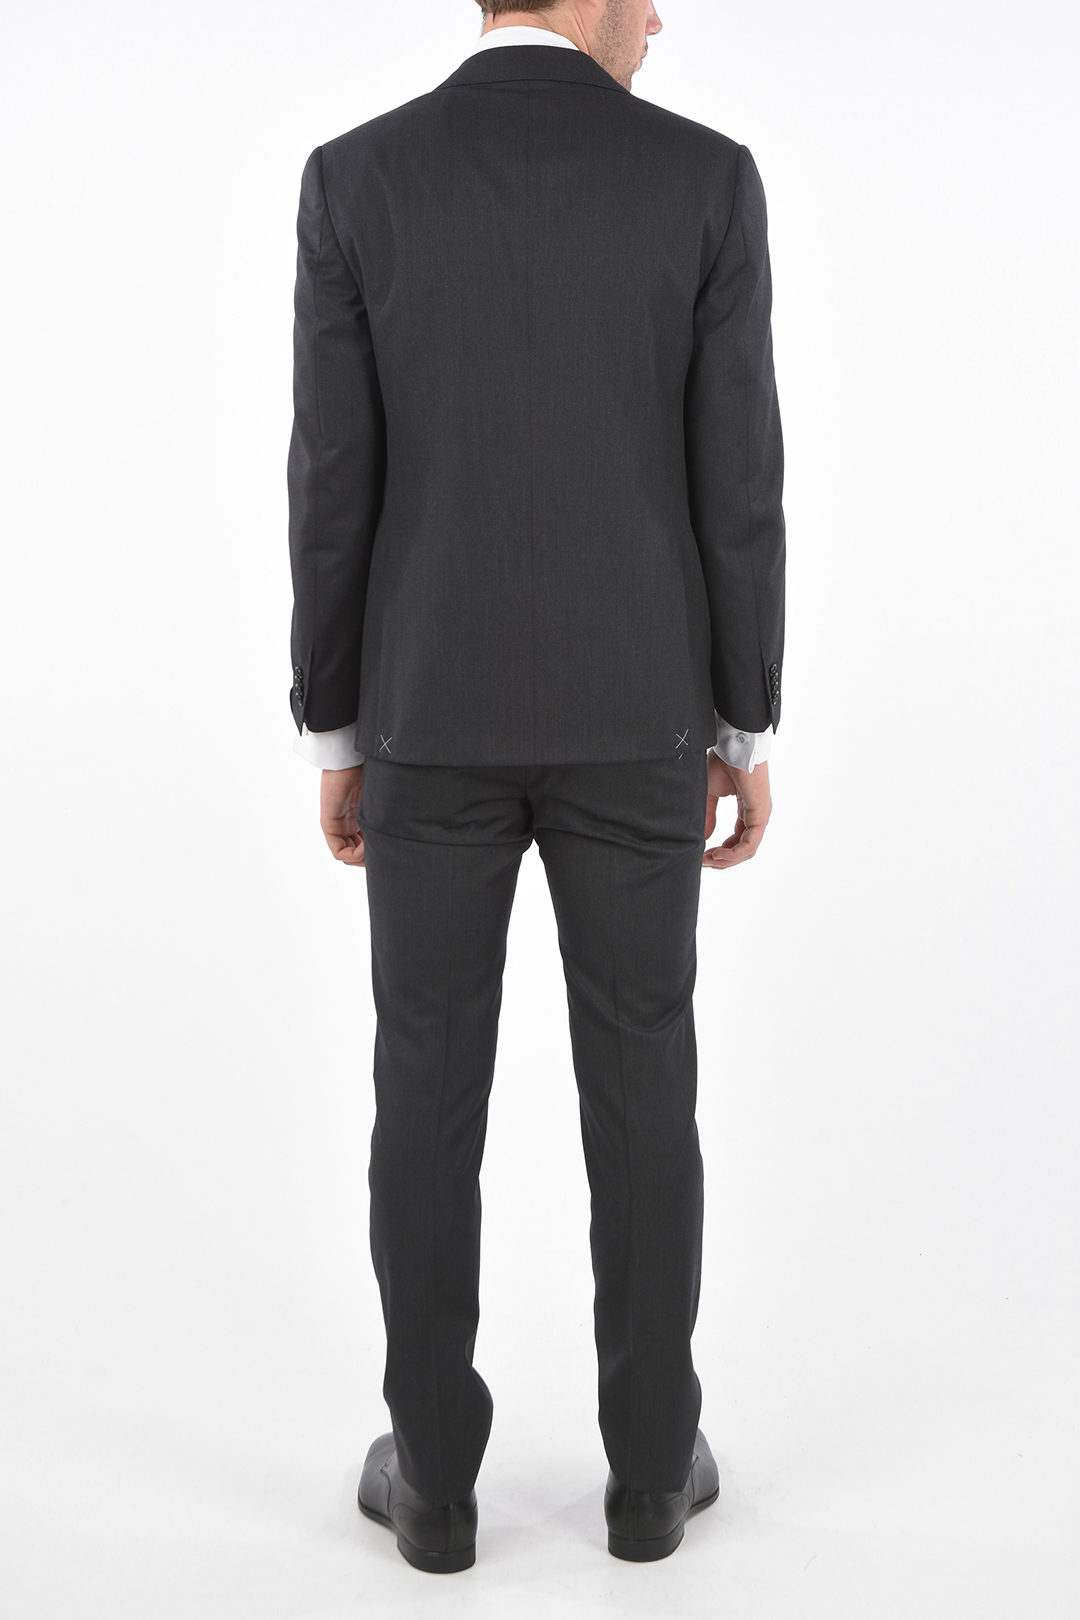 Corneliani Lined Flap Pocket Suit men - Glamood Outlet